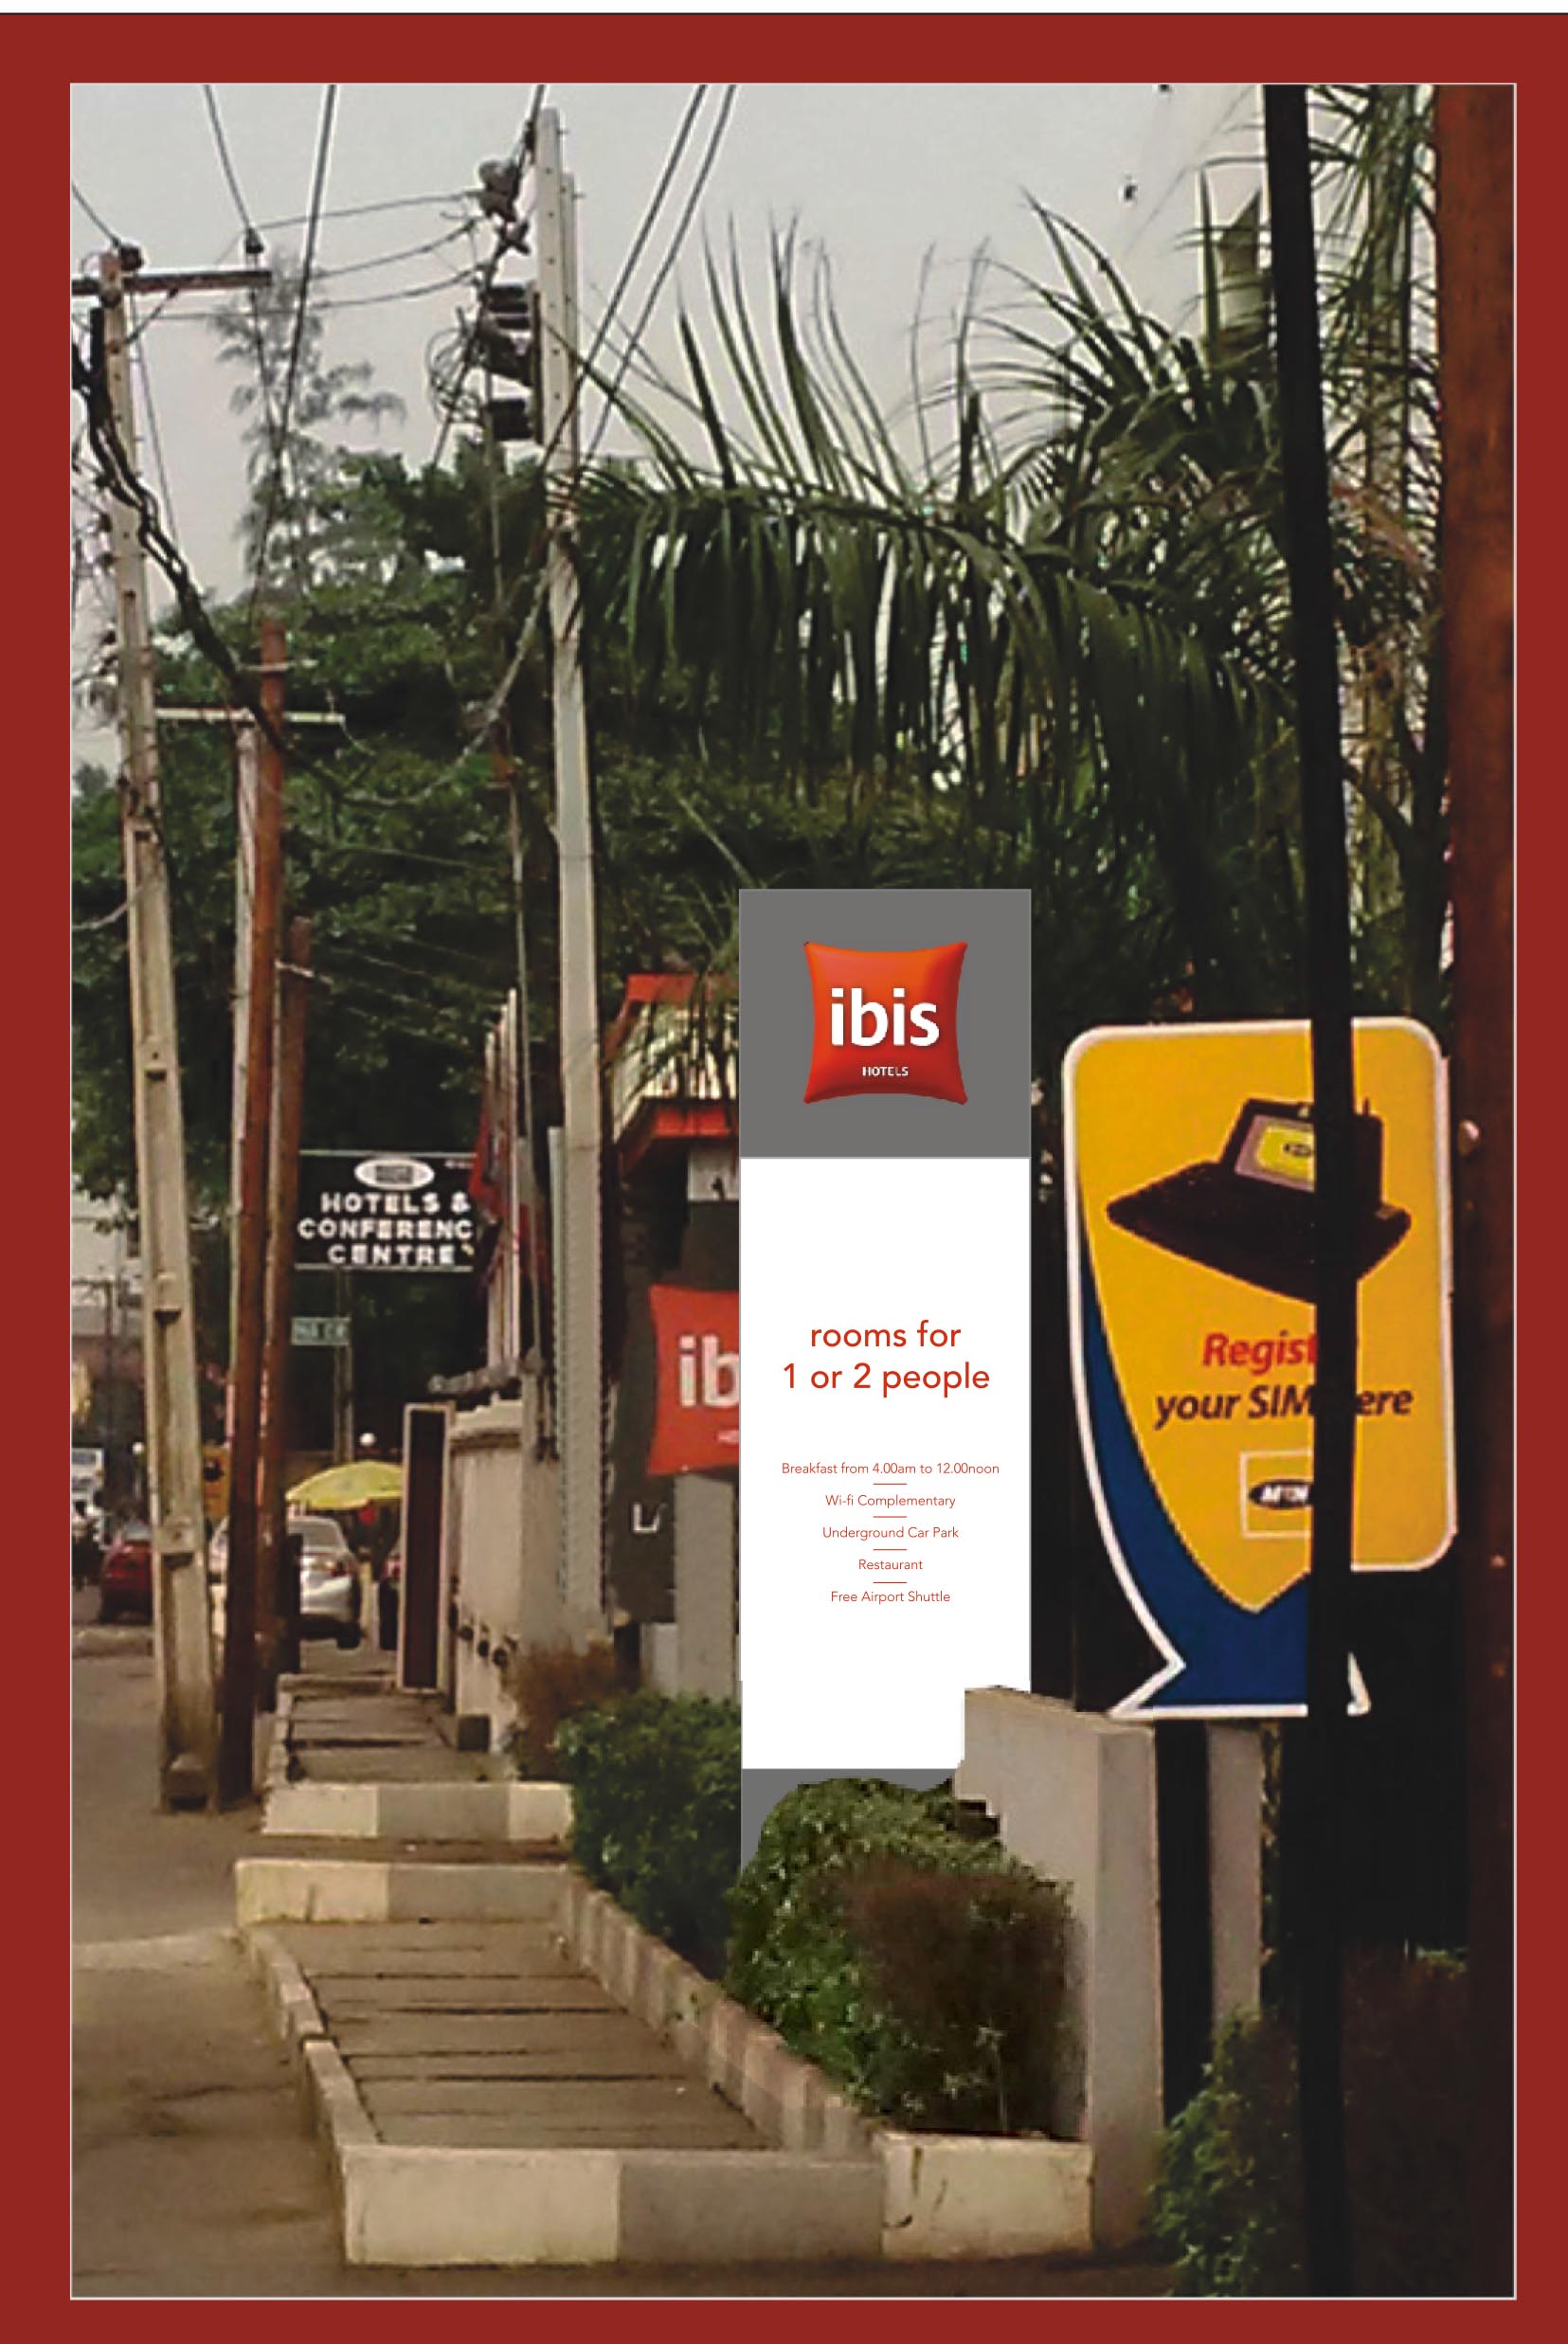 Ibis Hotel Sign Presentation 30-01-2016.cdr